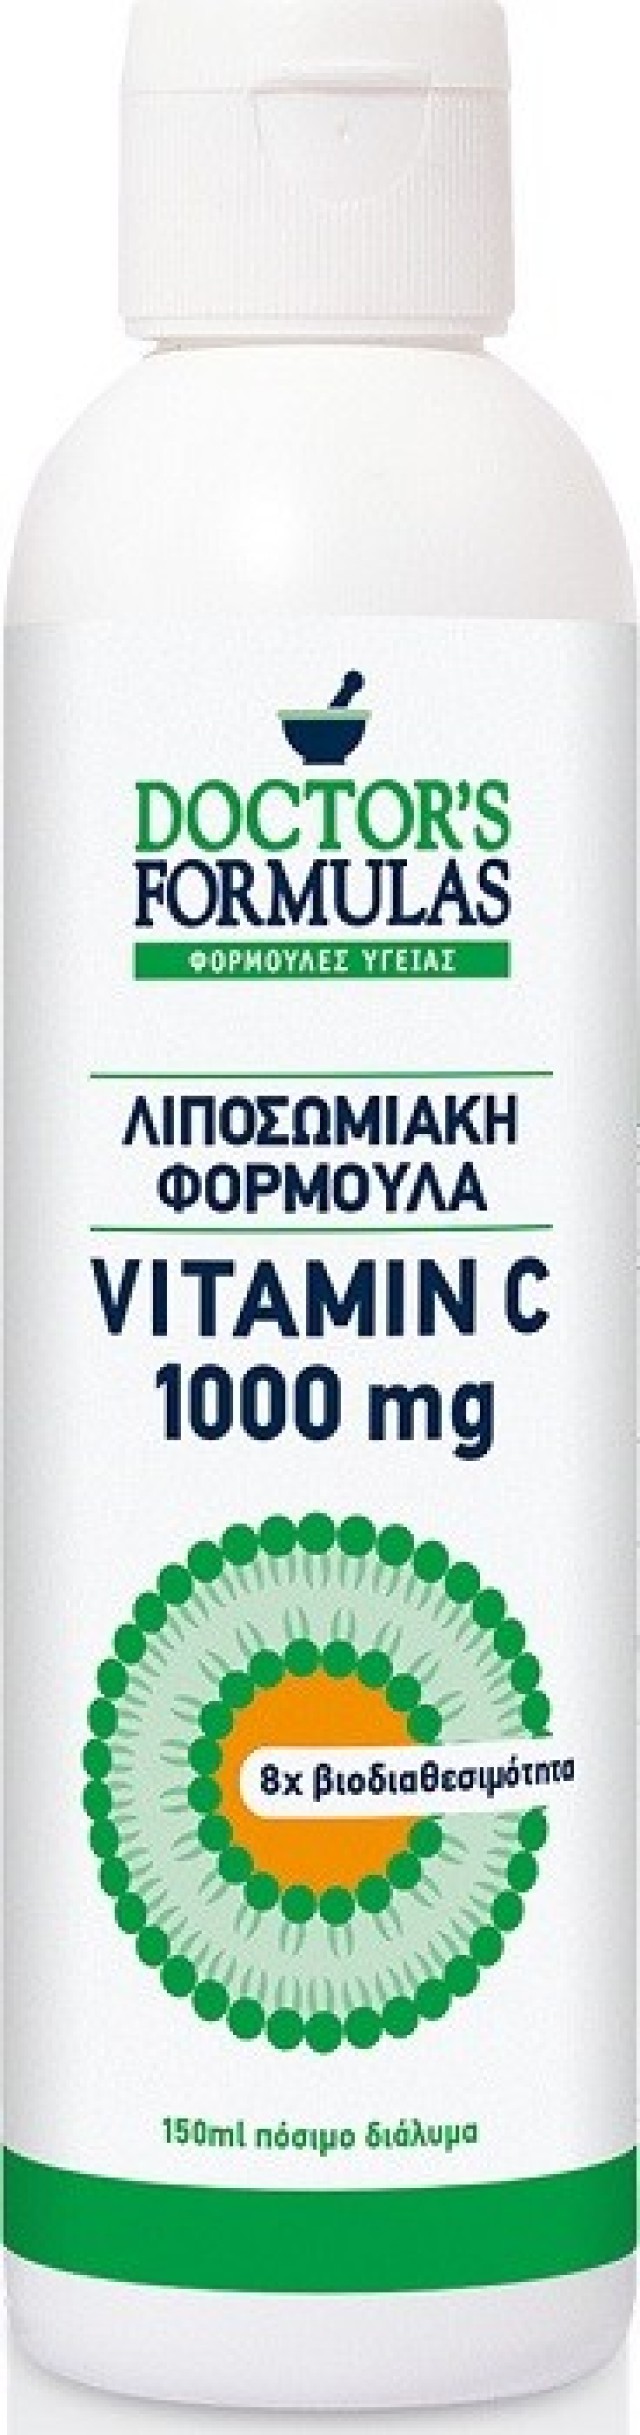 Doctors Formulas Vitamin C 1000mg Λιποσωμιακή Φόρμουλα Βιταμίνης C 150ml  ΗΜ. ΛΗΞΗΣ 6/23